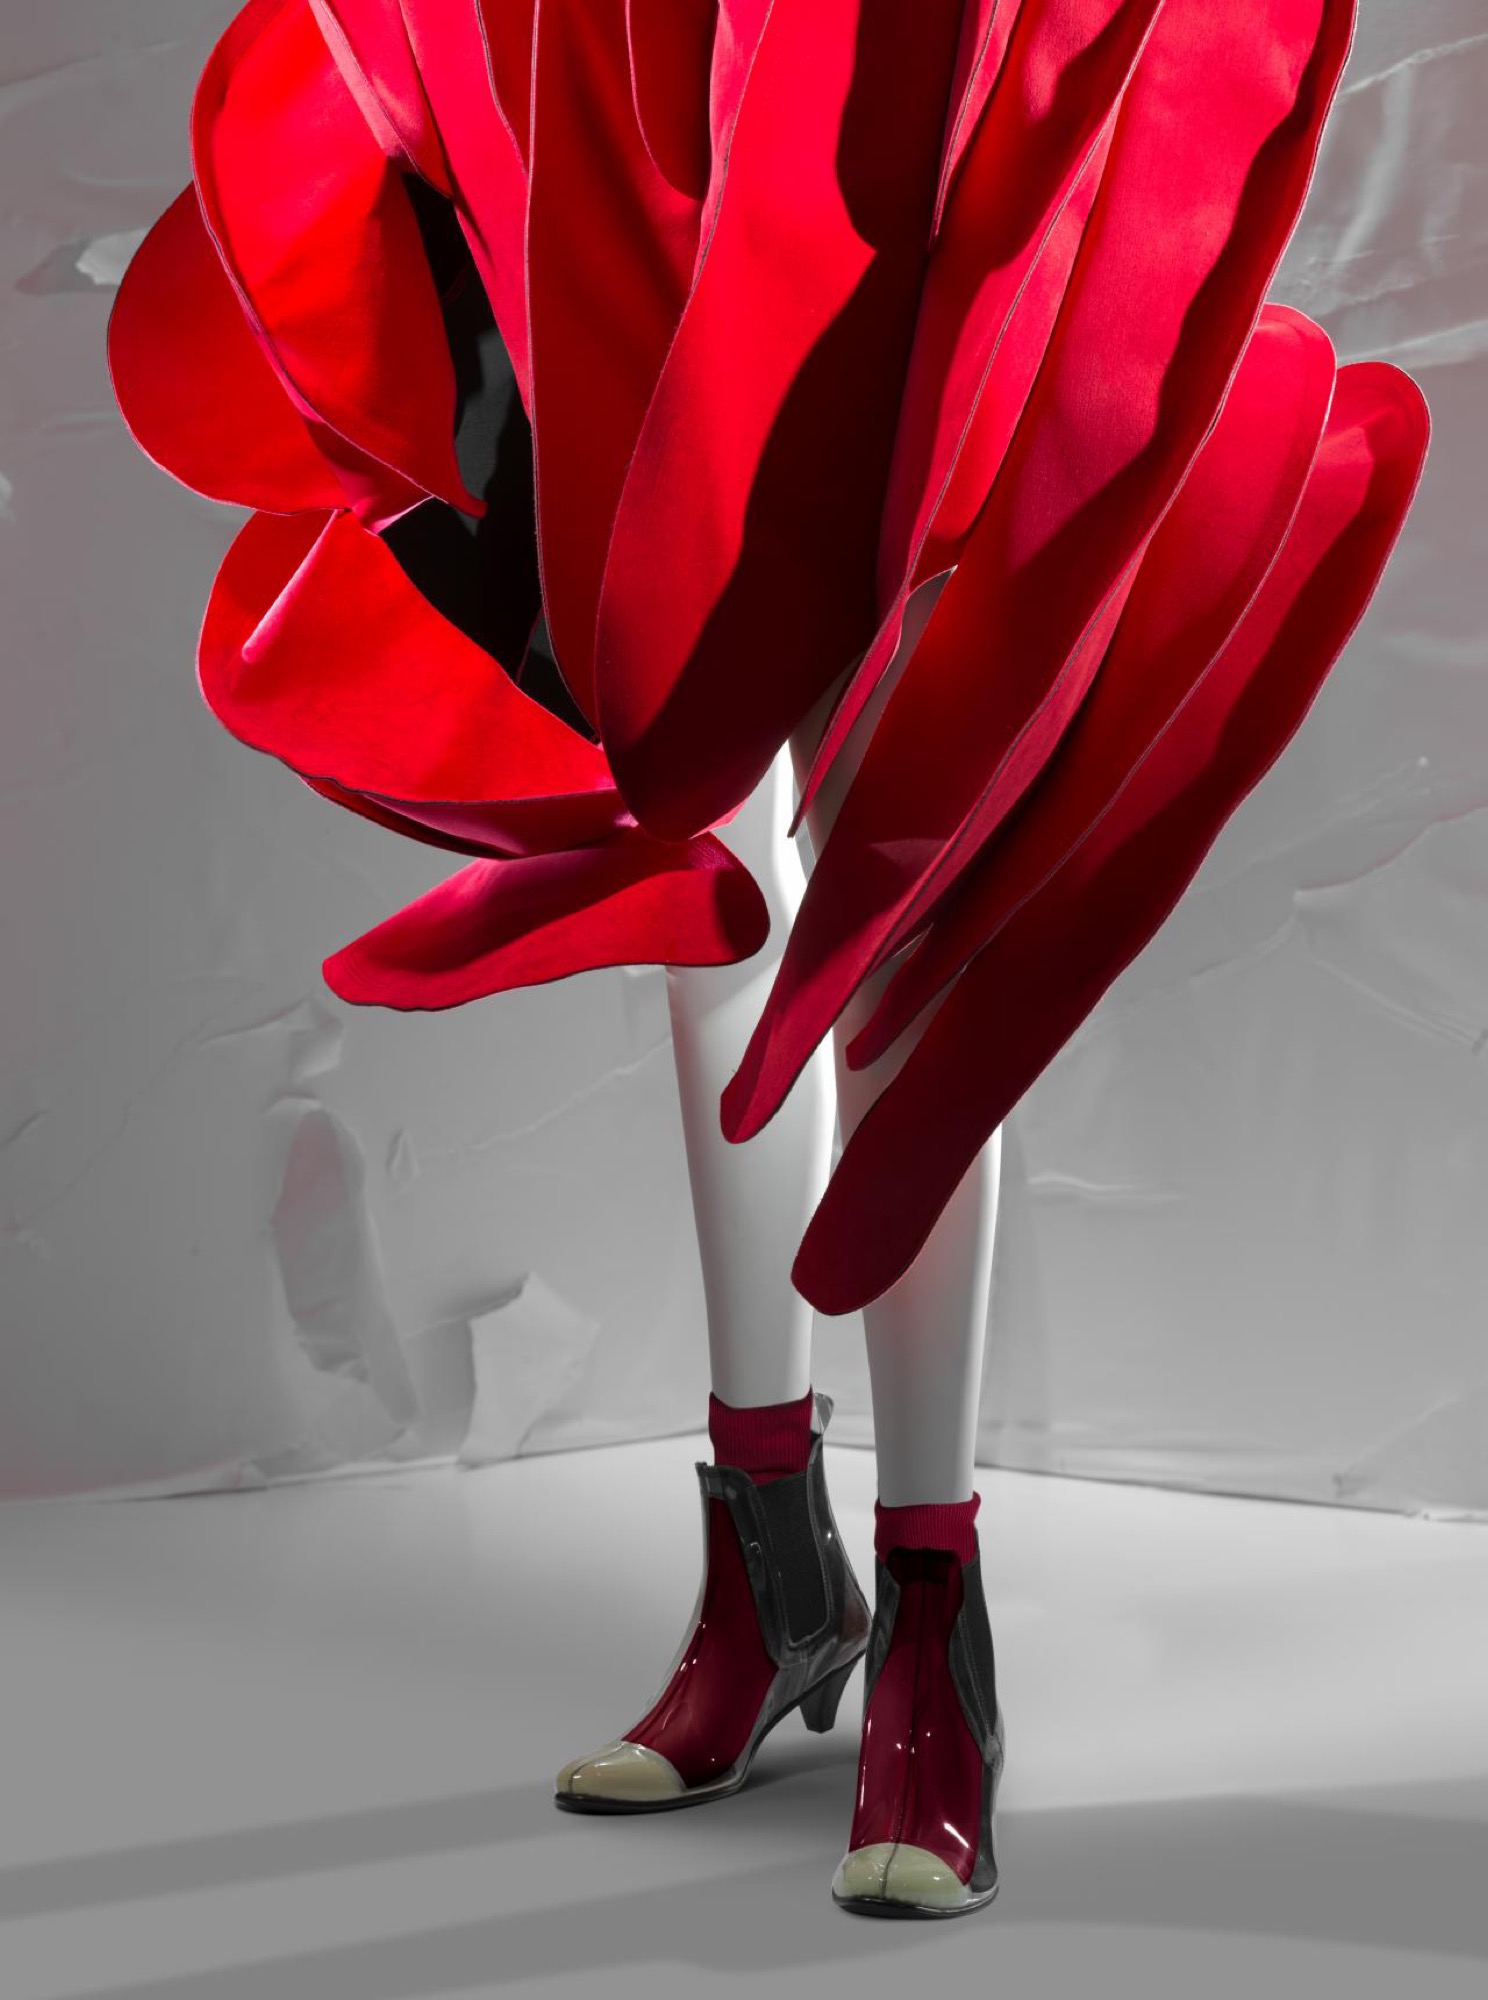 Comme des Garçons, Tokyo (fashion house)<br />
Rei Kawakubo (designer)<br />
Cape, shorts, socks and boots 2014 (detail)<br />
Blood and Roses collection spring–summer 2015<br />
Collection of Takamasa Takahashi<br />
© Comme des Garçons